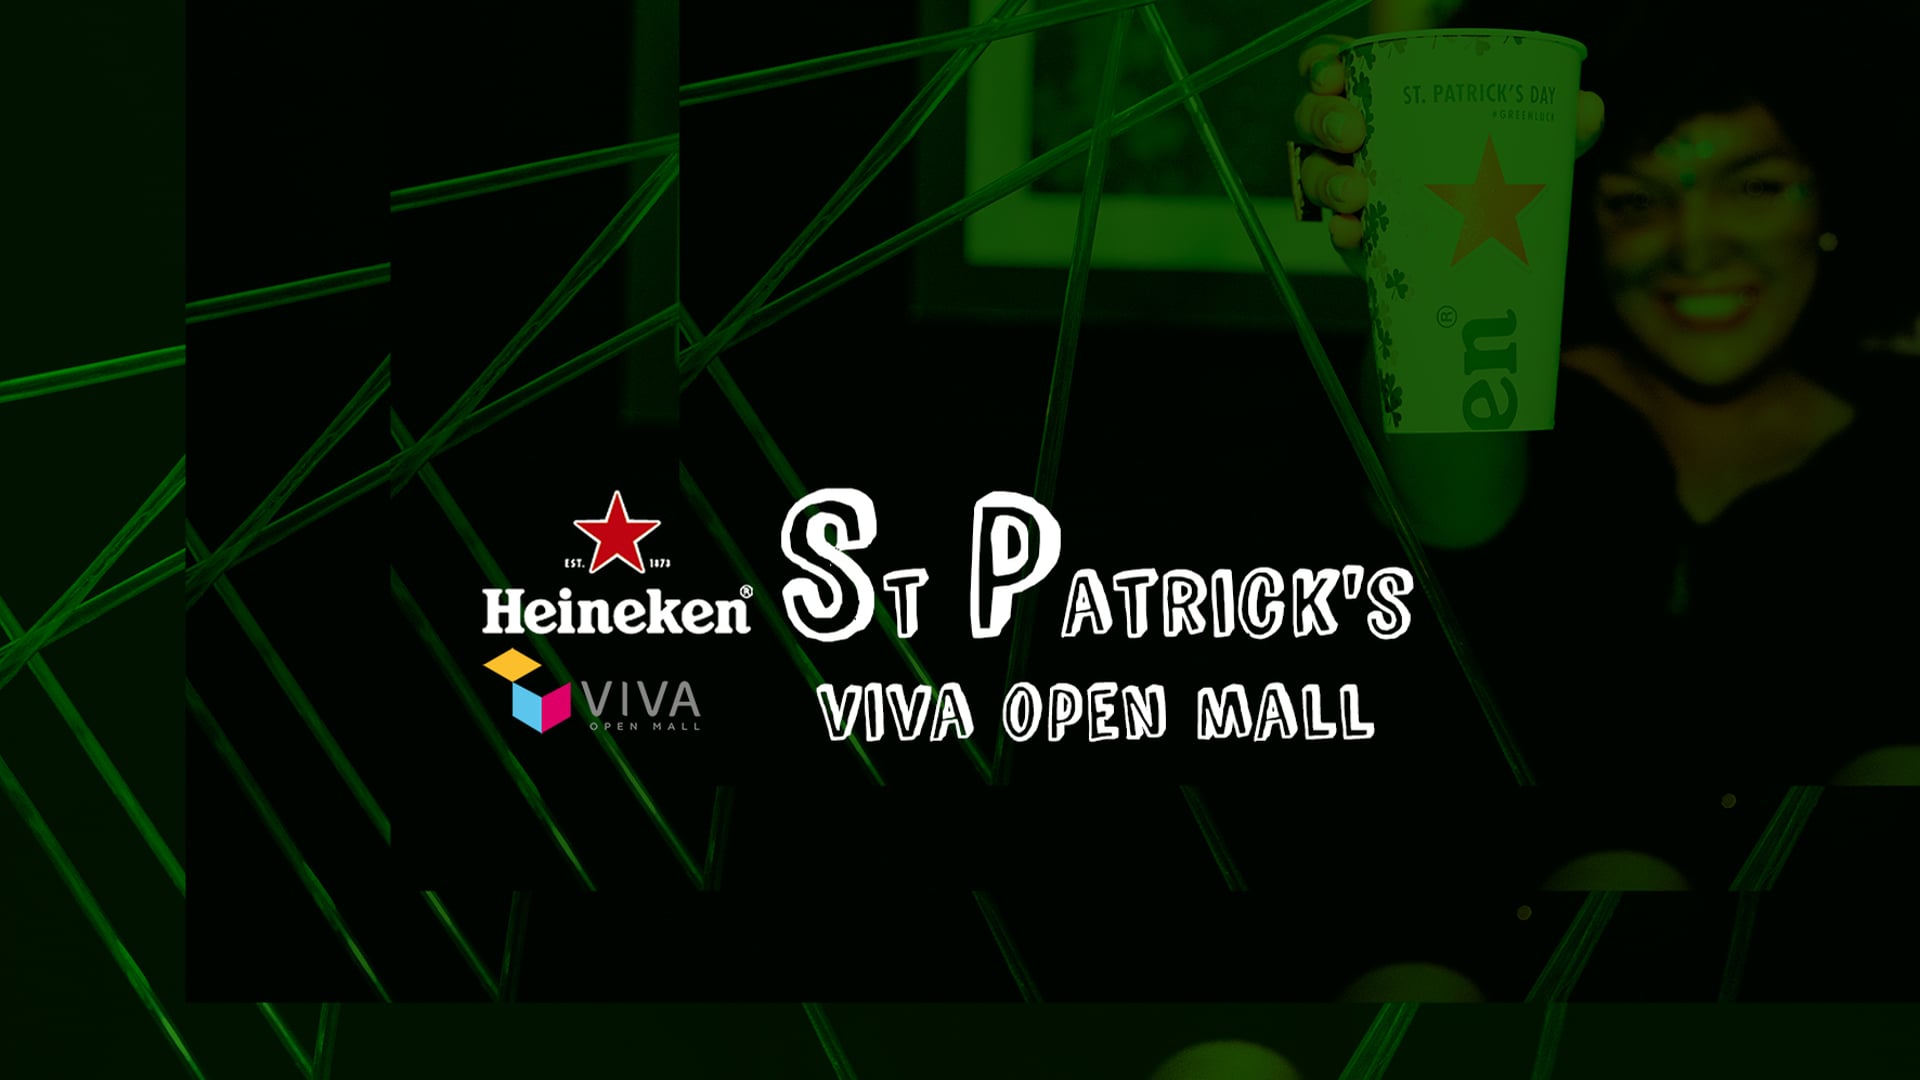 St Patricks │ Viva Open Mall